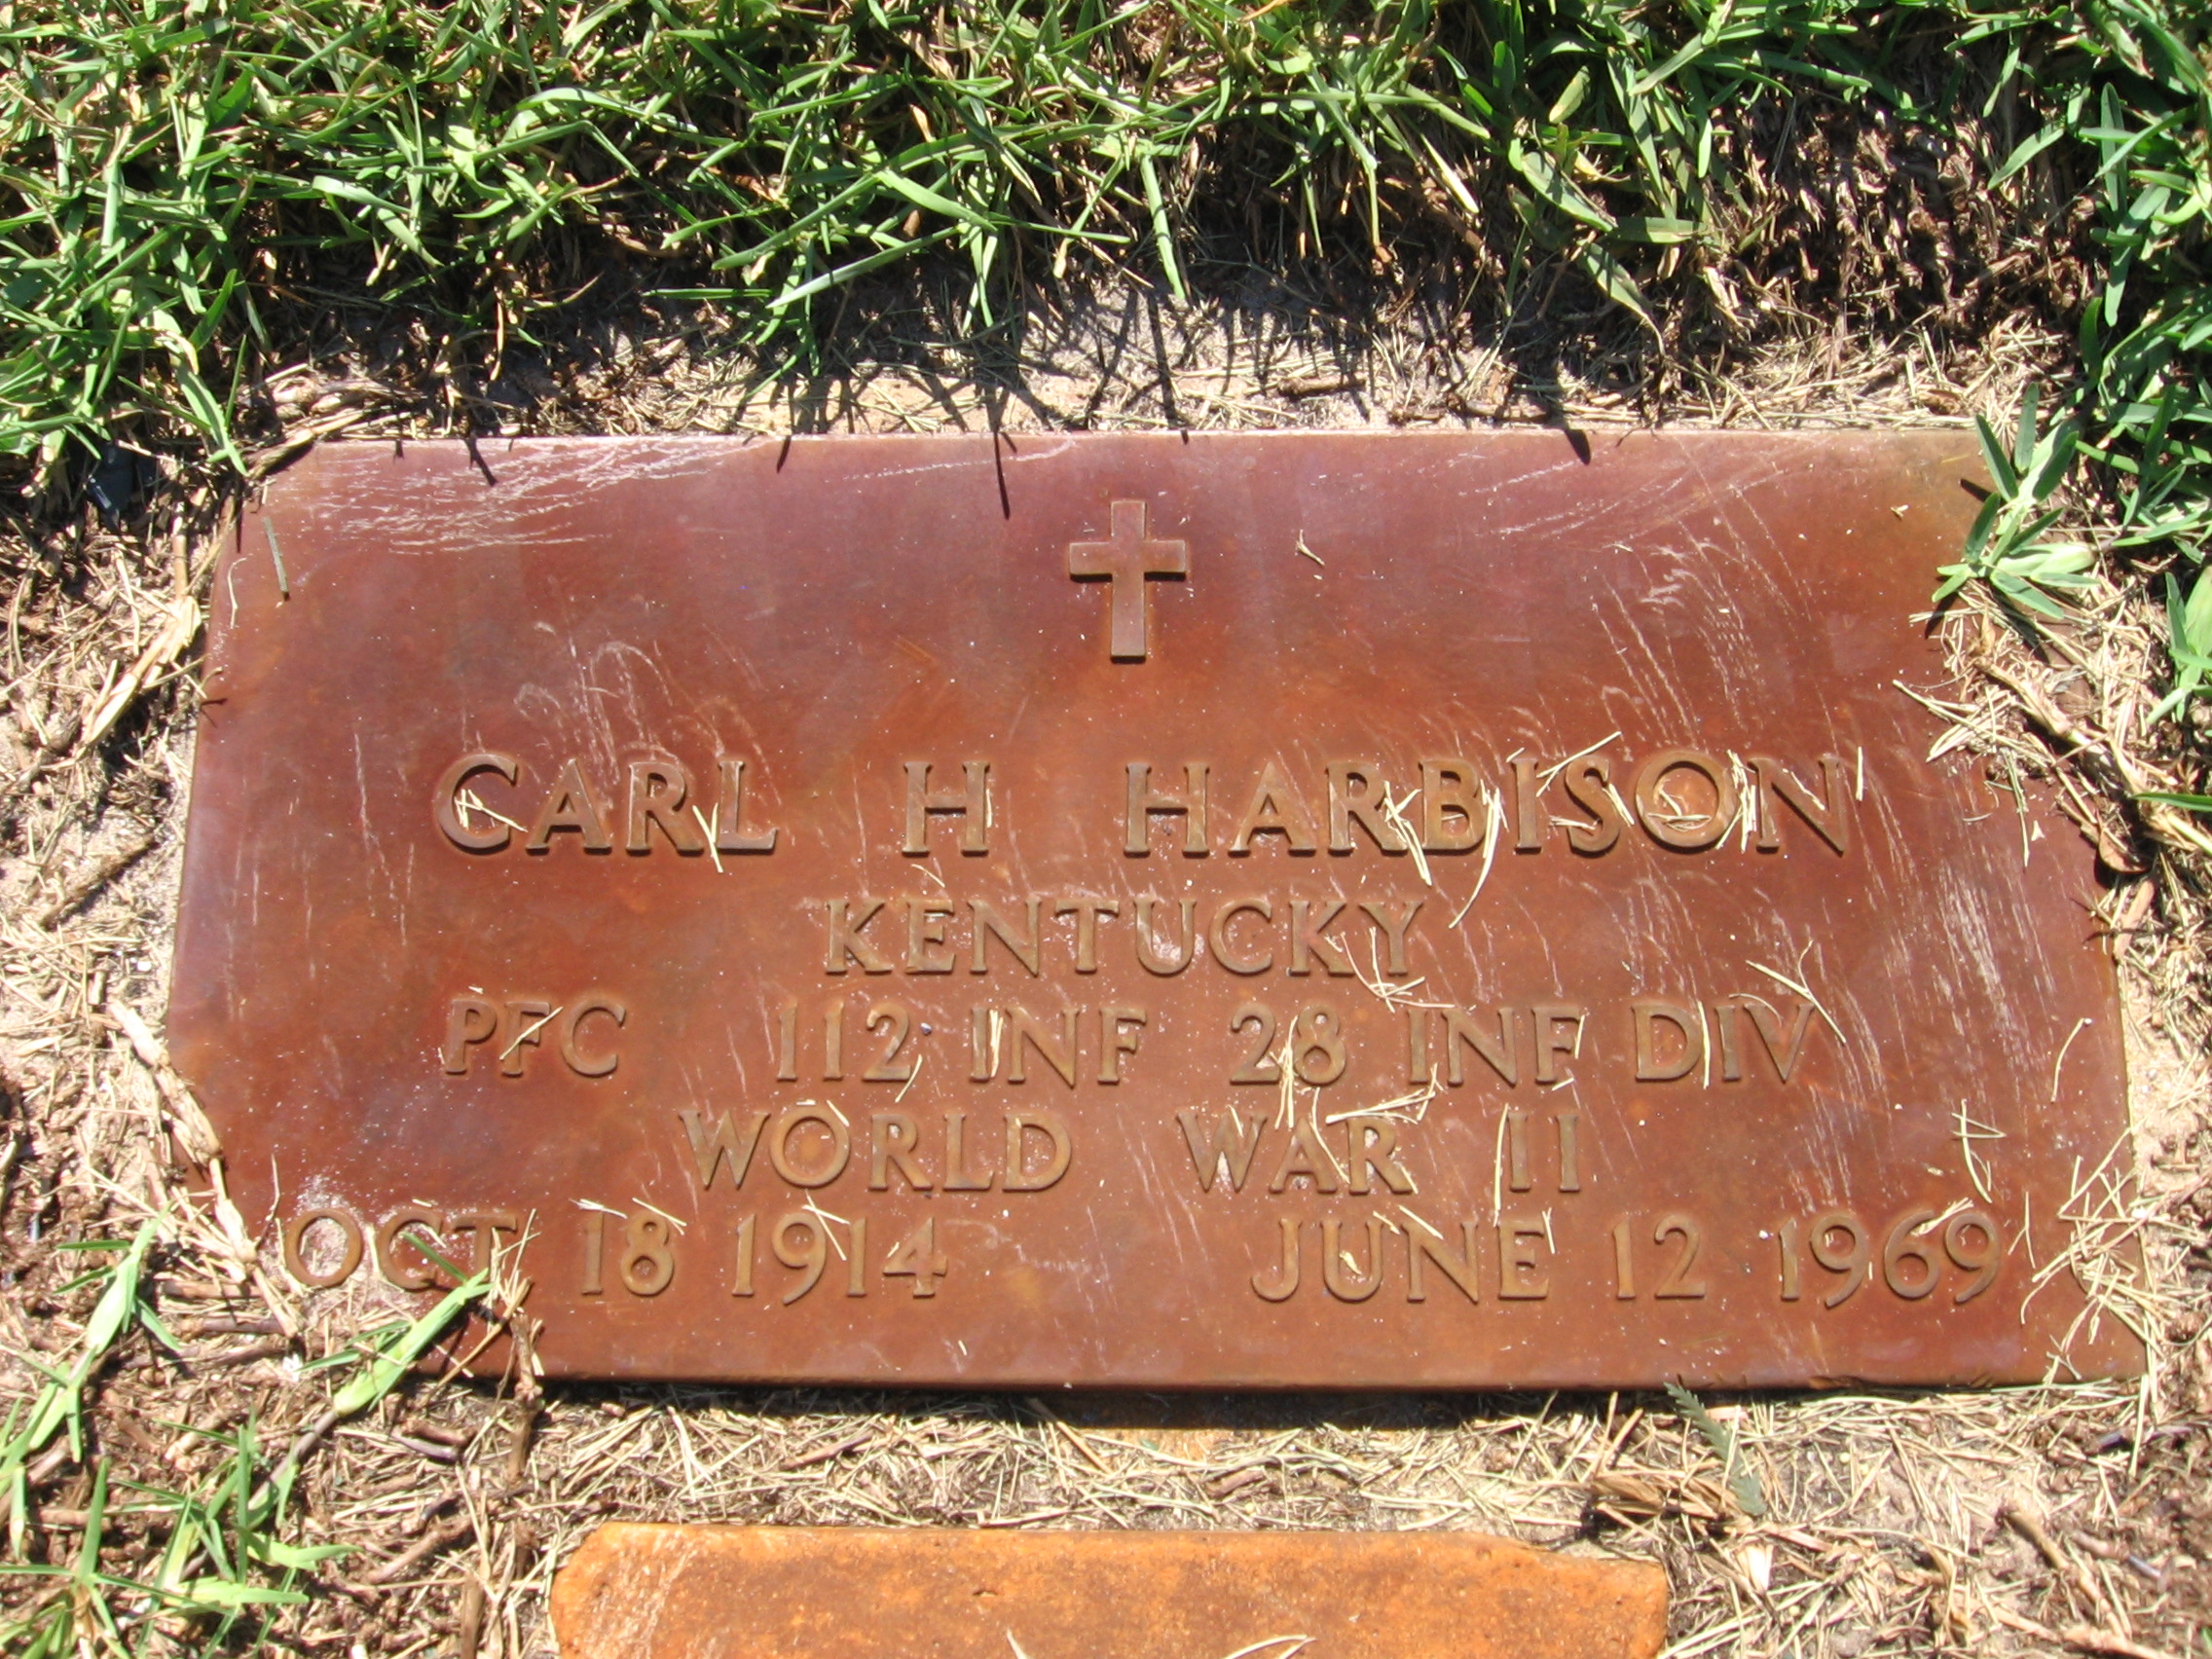 PFC Carl H Harbison